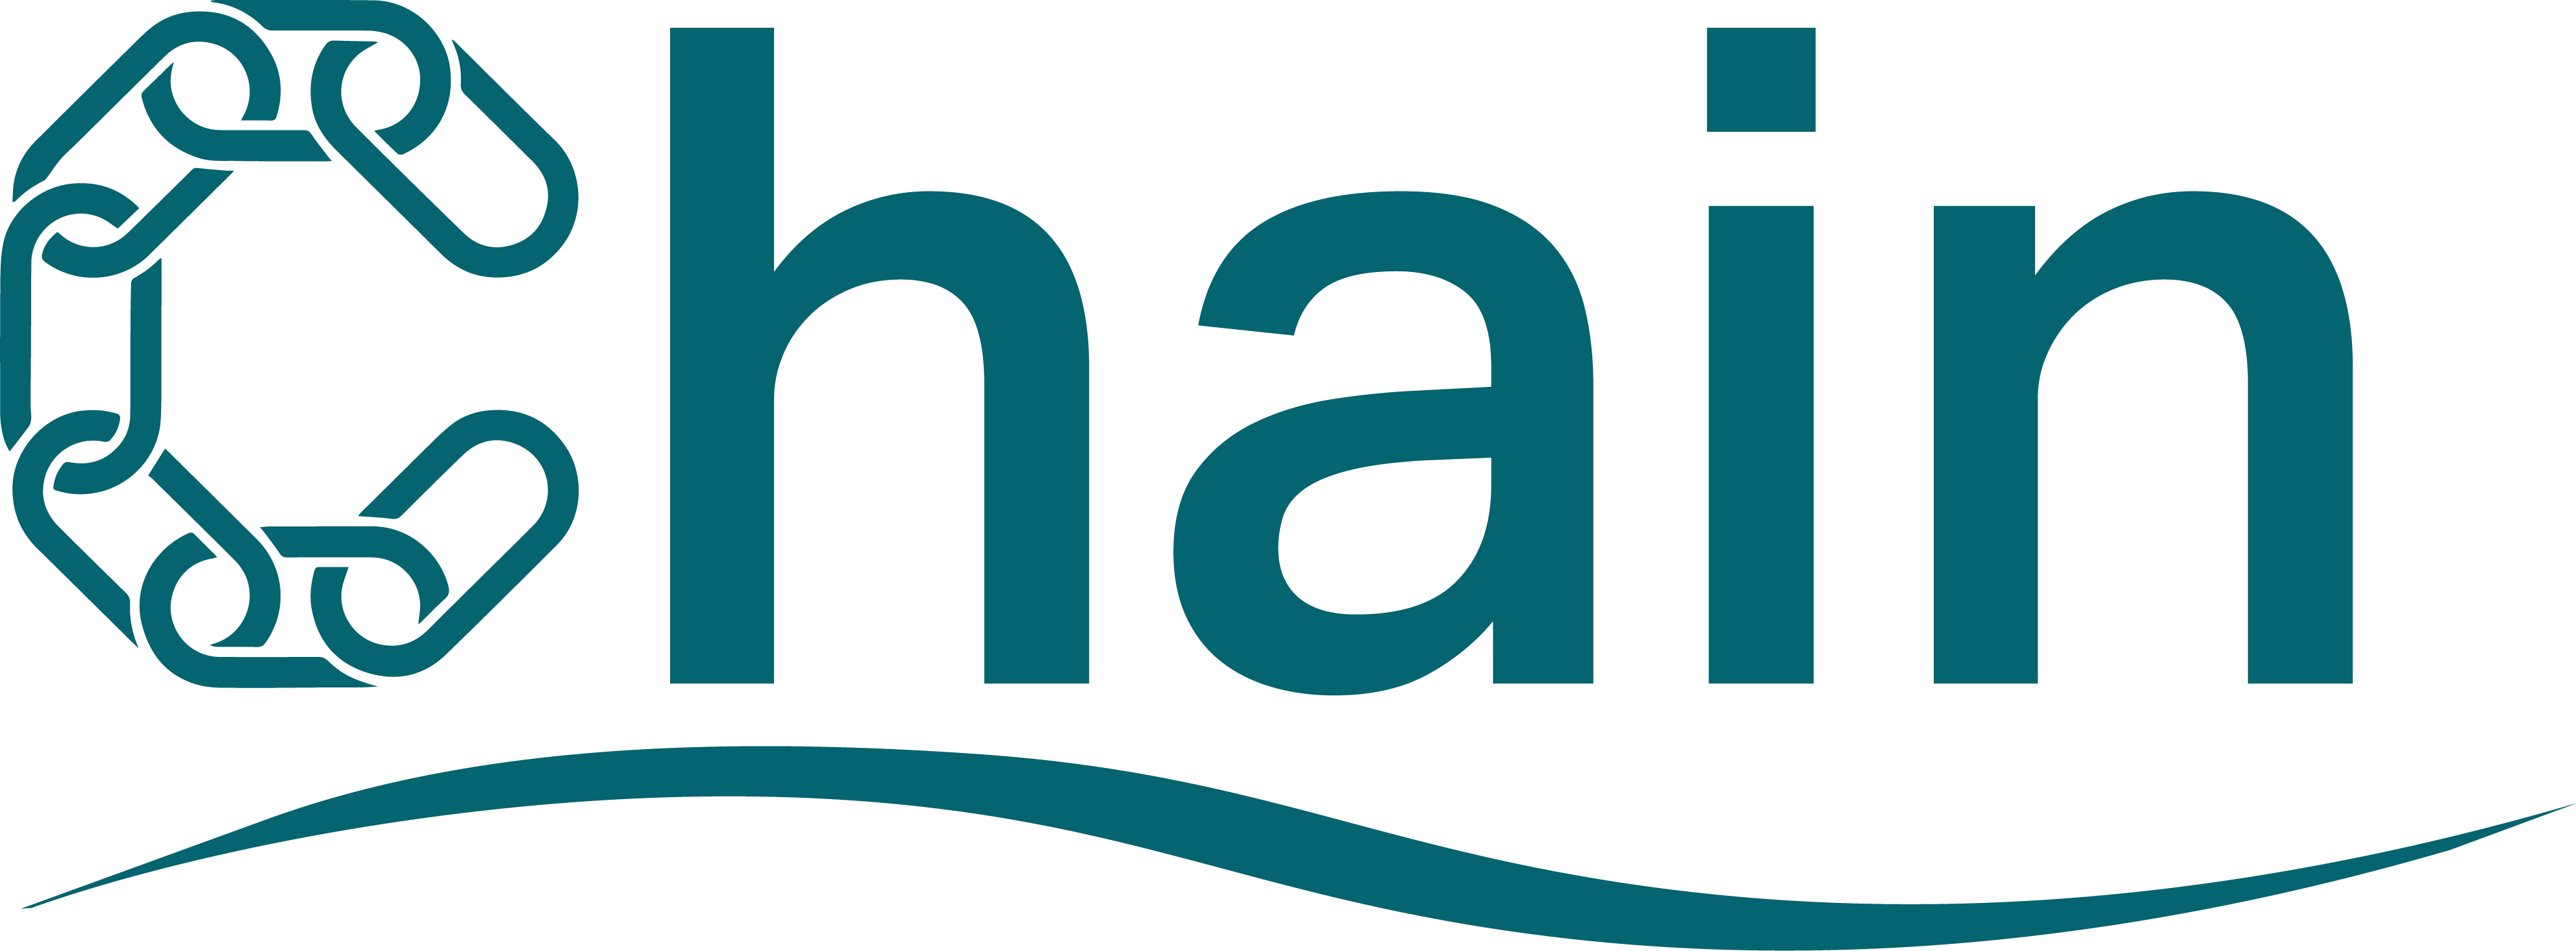 CHAIN logo